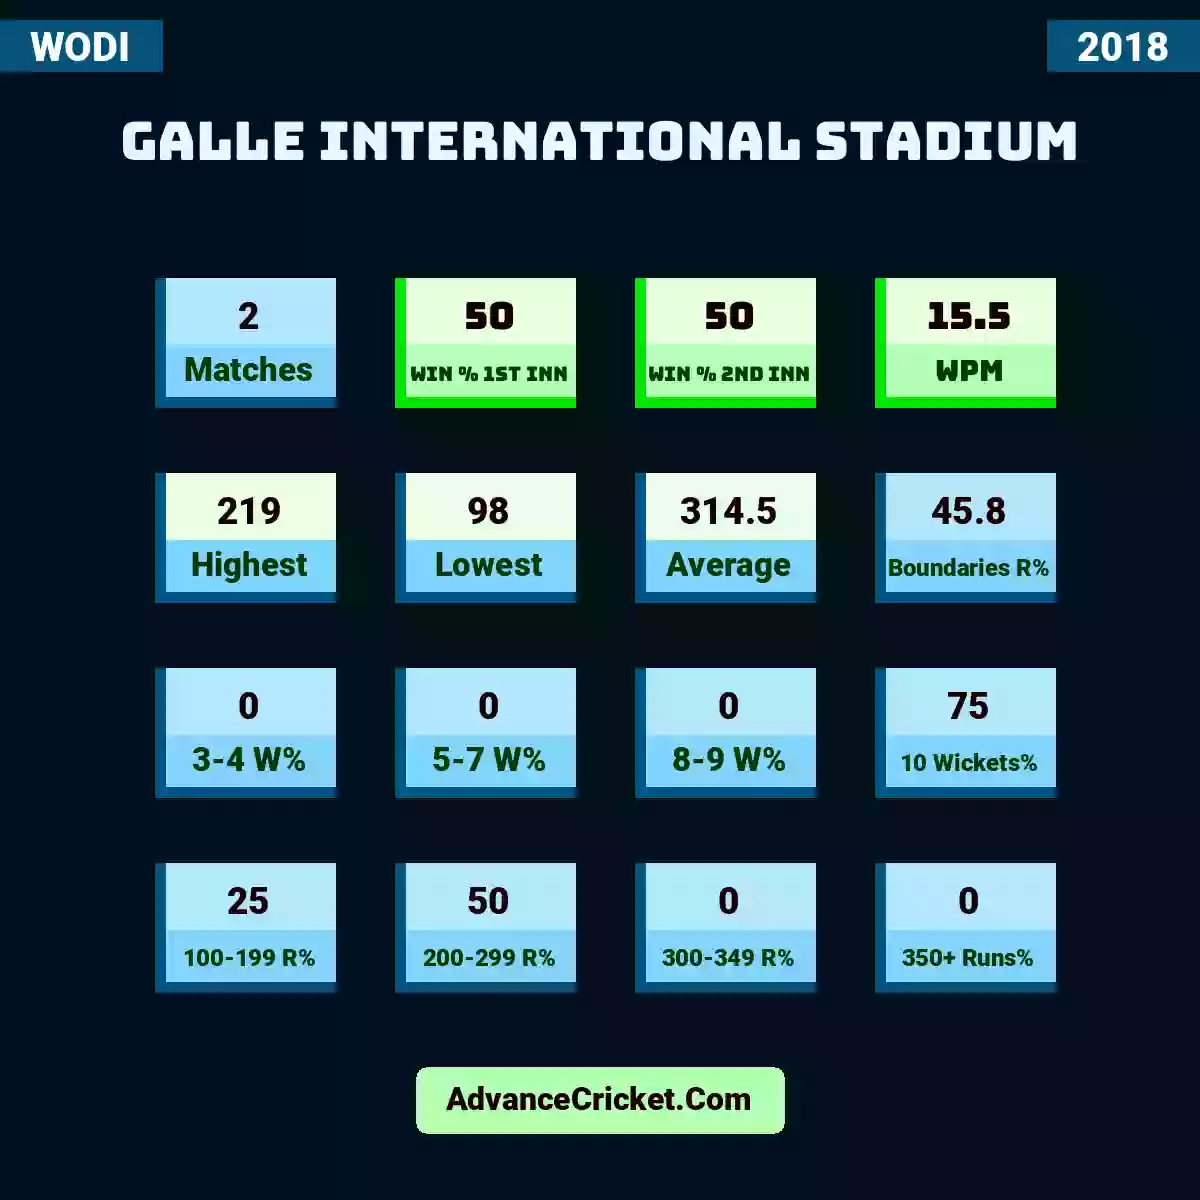 Image showing Galle International Stadium with Matches: 2, Win % 1st Inn: 50, Win % 2nd Inn: 50, WPM: 15.5, Highest: 219, Lowest: 98, Average: 314.5, Boundaries R%: 45.8, 3-4 W%: 0, 5-7 W%: 0, 8-9 W%: 0, 10 Wickets%: 75, 100-199 R%: 25, 200-299 R%: 50, 300-349 R%: 0, 350+ Runs%: 0.